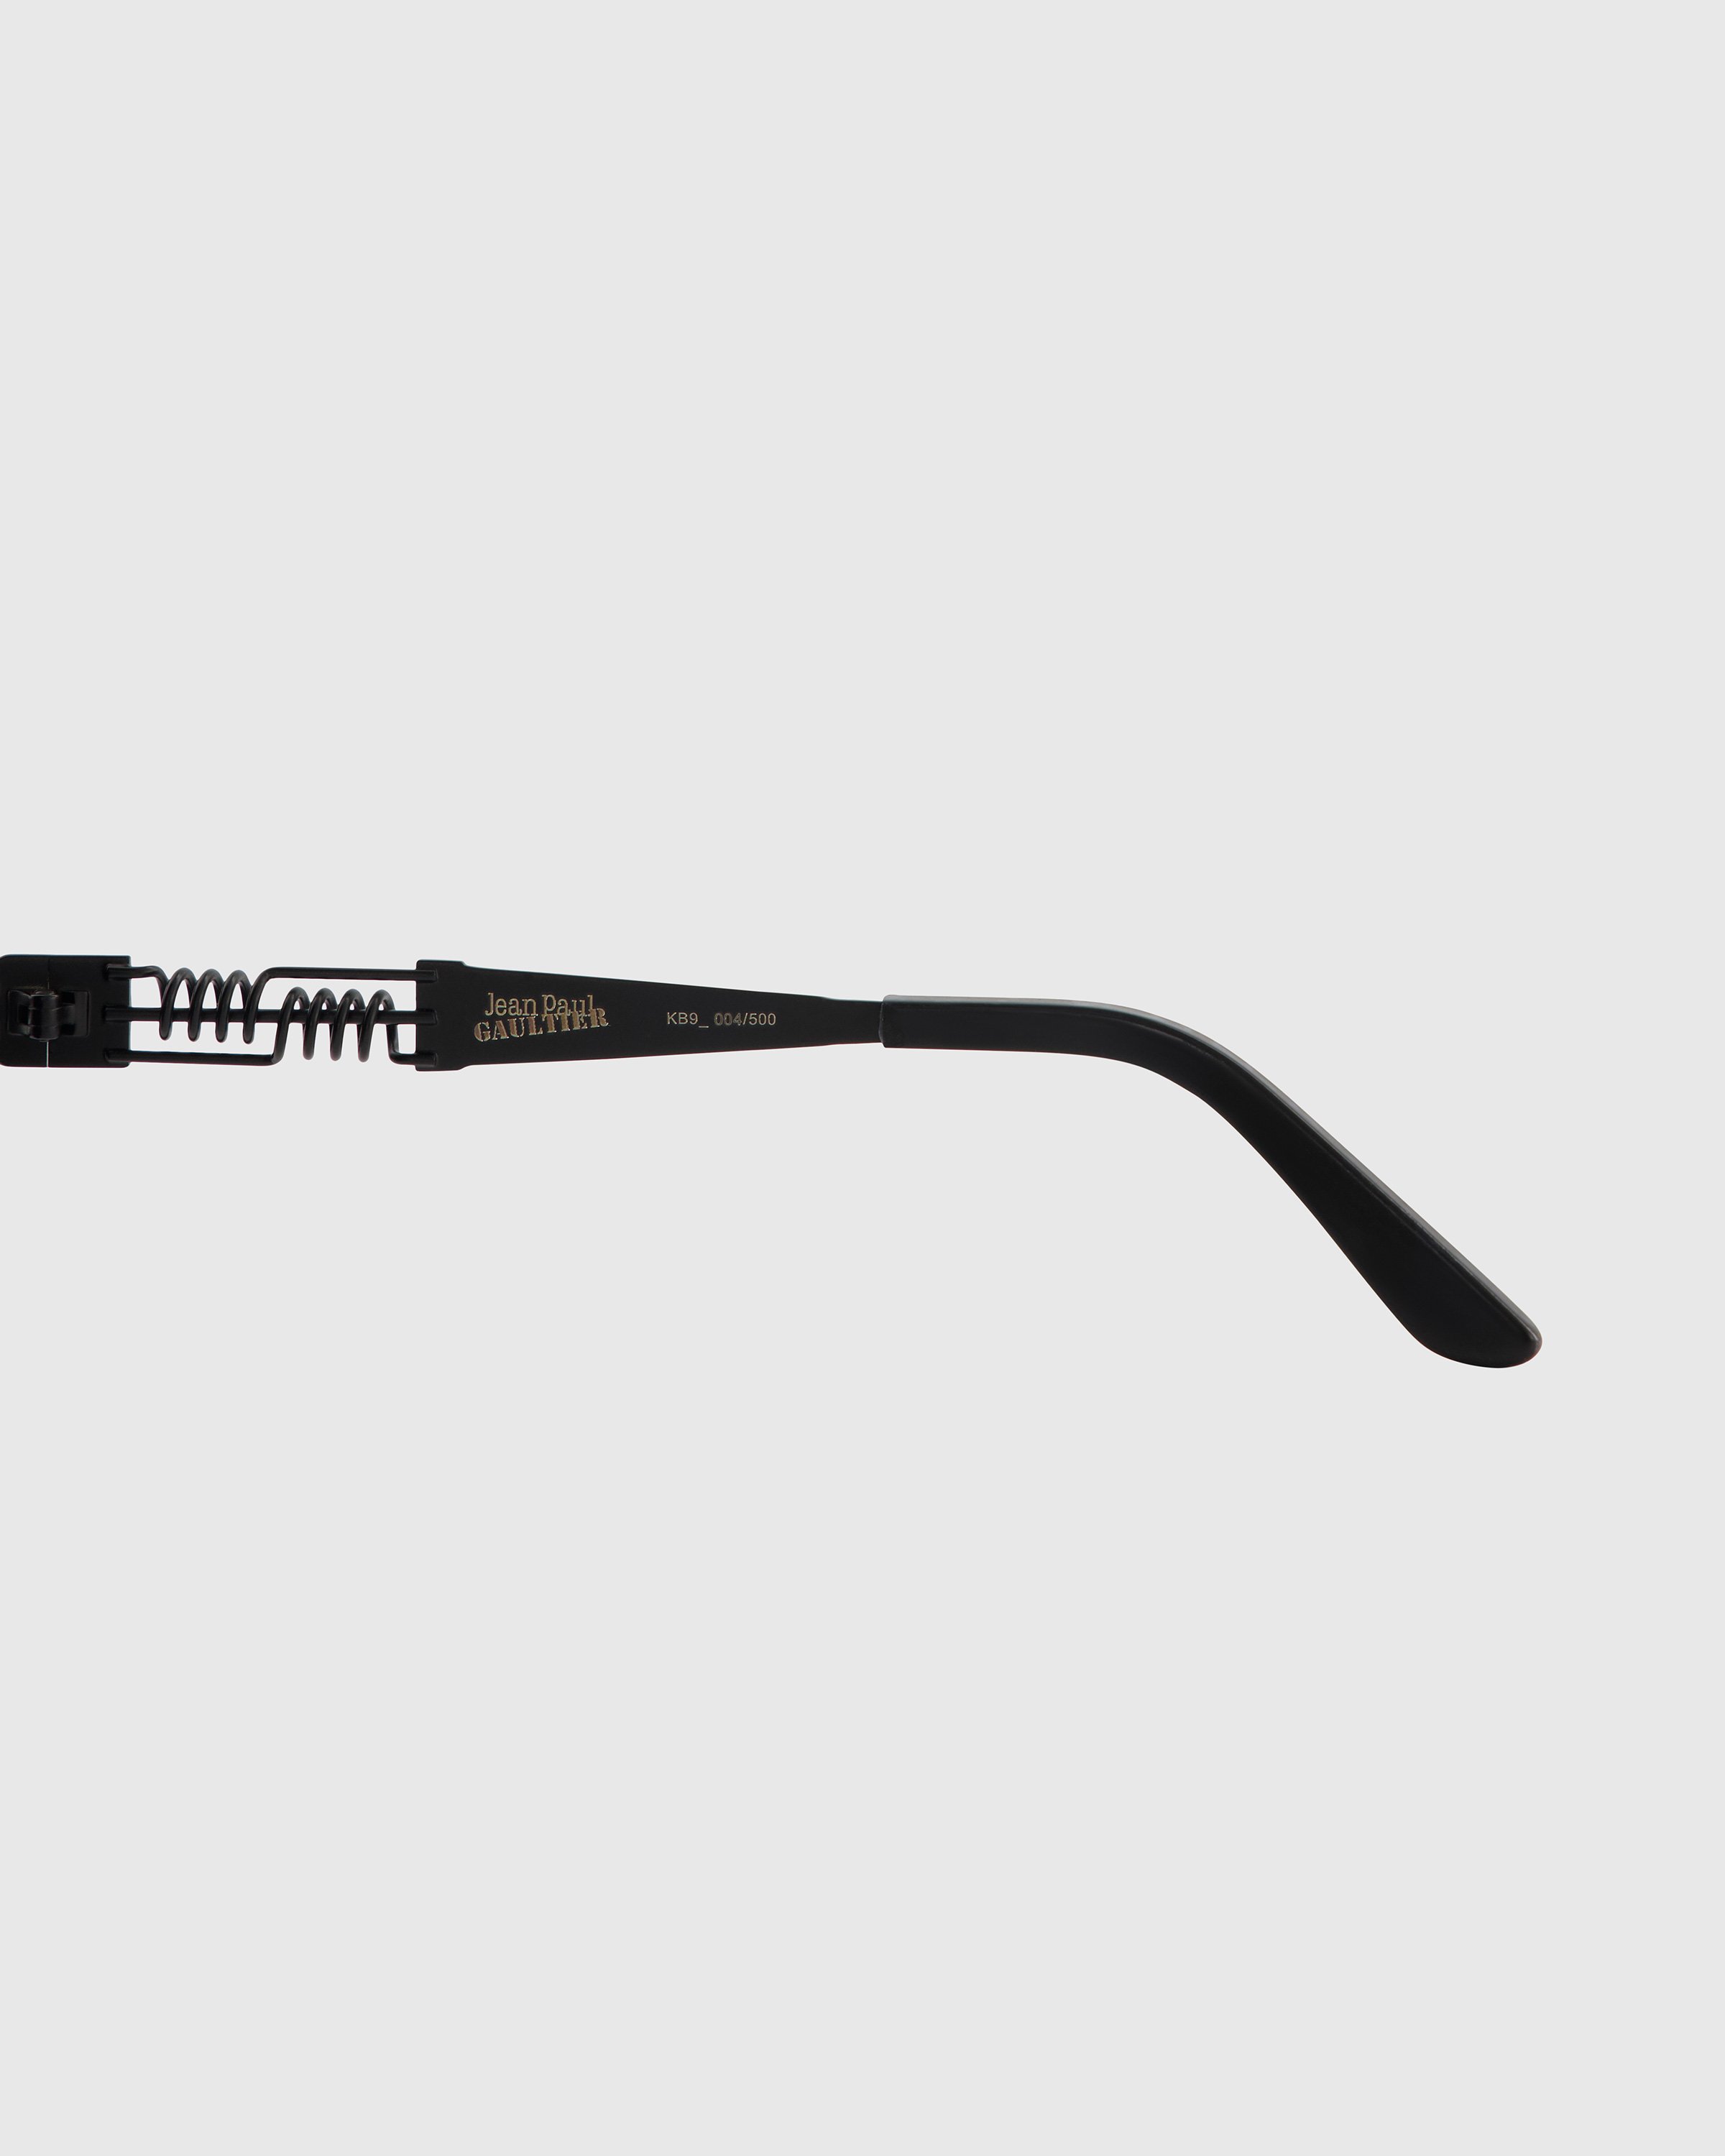 Jean Paul Gaultier x Burna Boy - 56-6106 Double Resort Sunglasses Black - Accessories - Black - Image 3